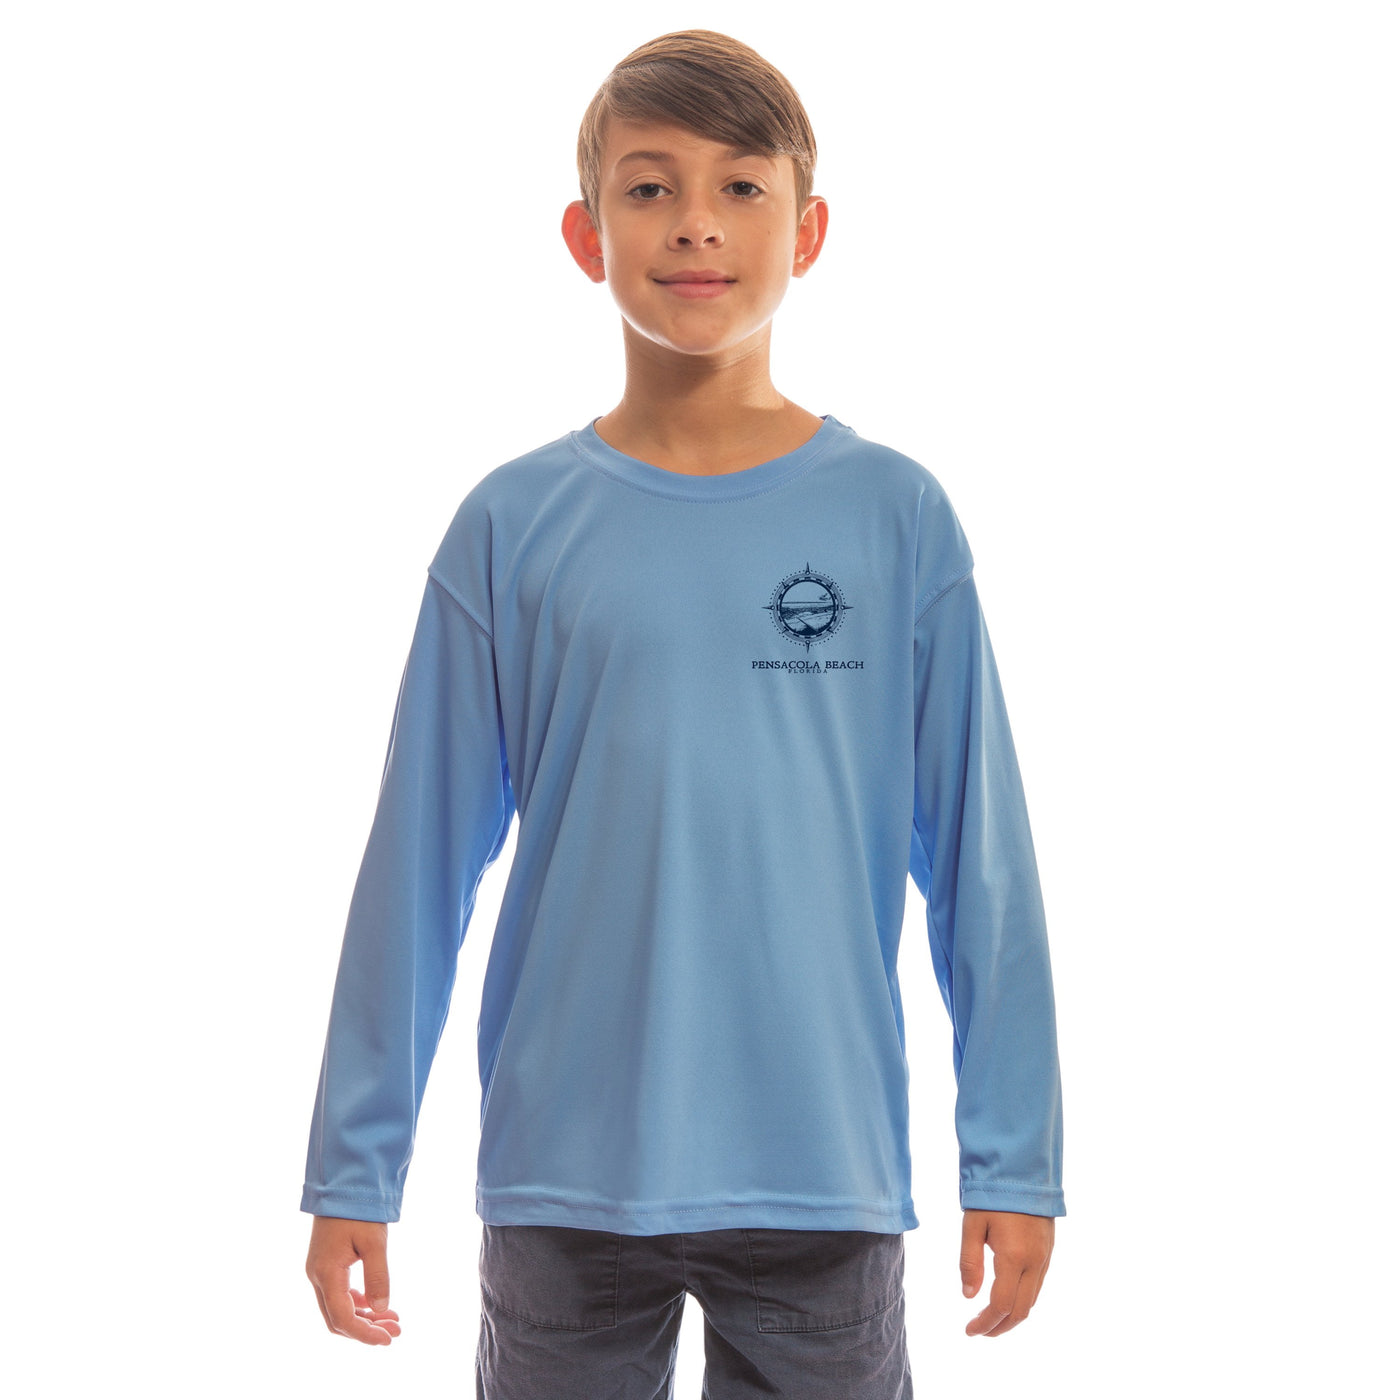 Compass Vintage Pensacola Beach Youth UPF 50+ UV/Sun Protection Long Sleeve T-Shirt